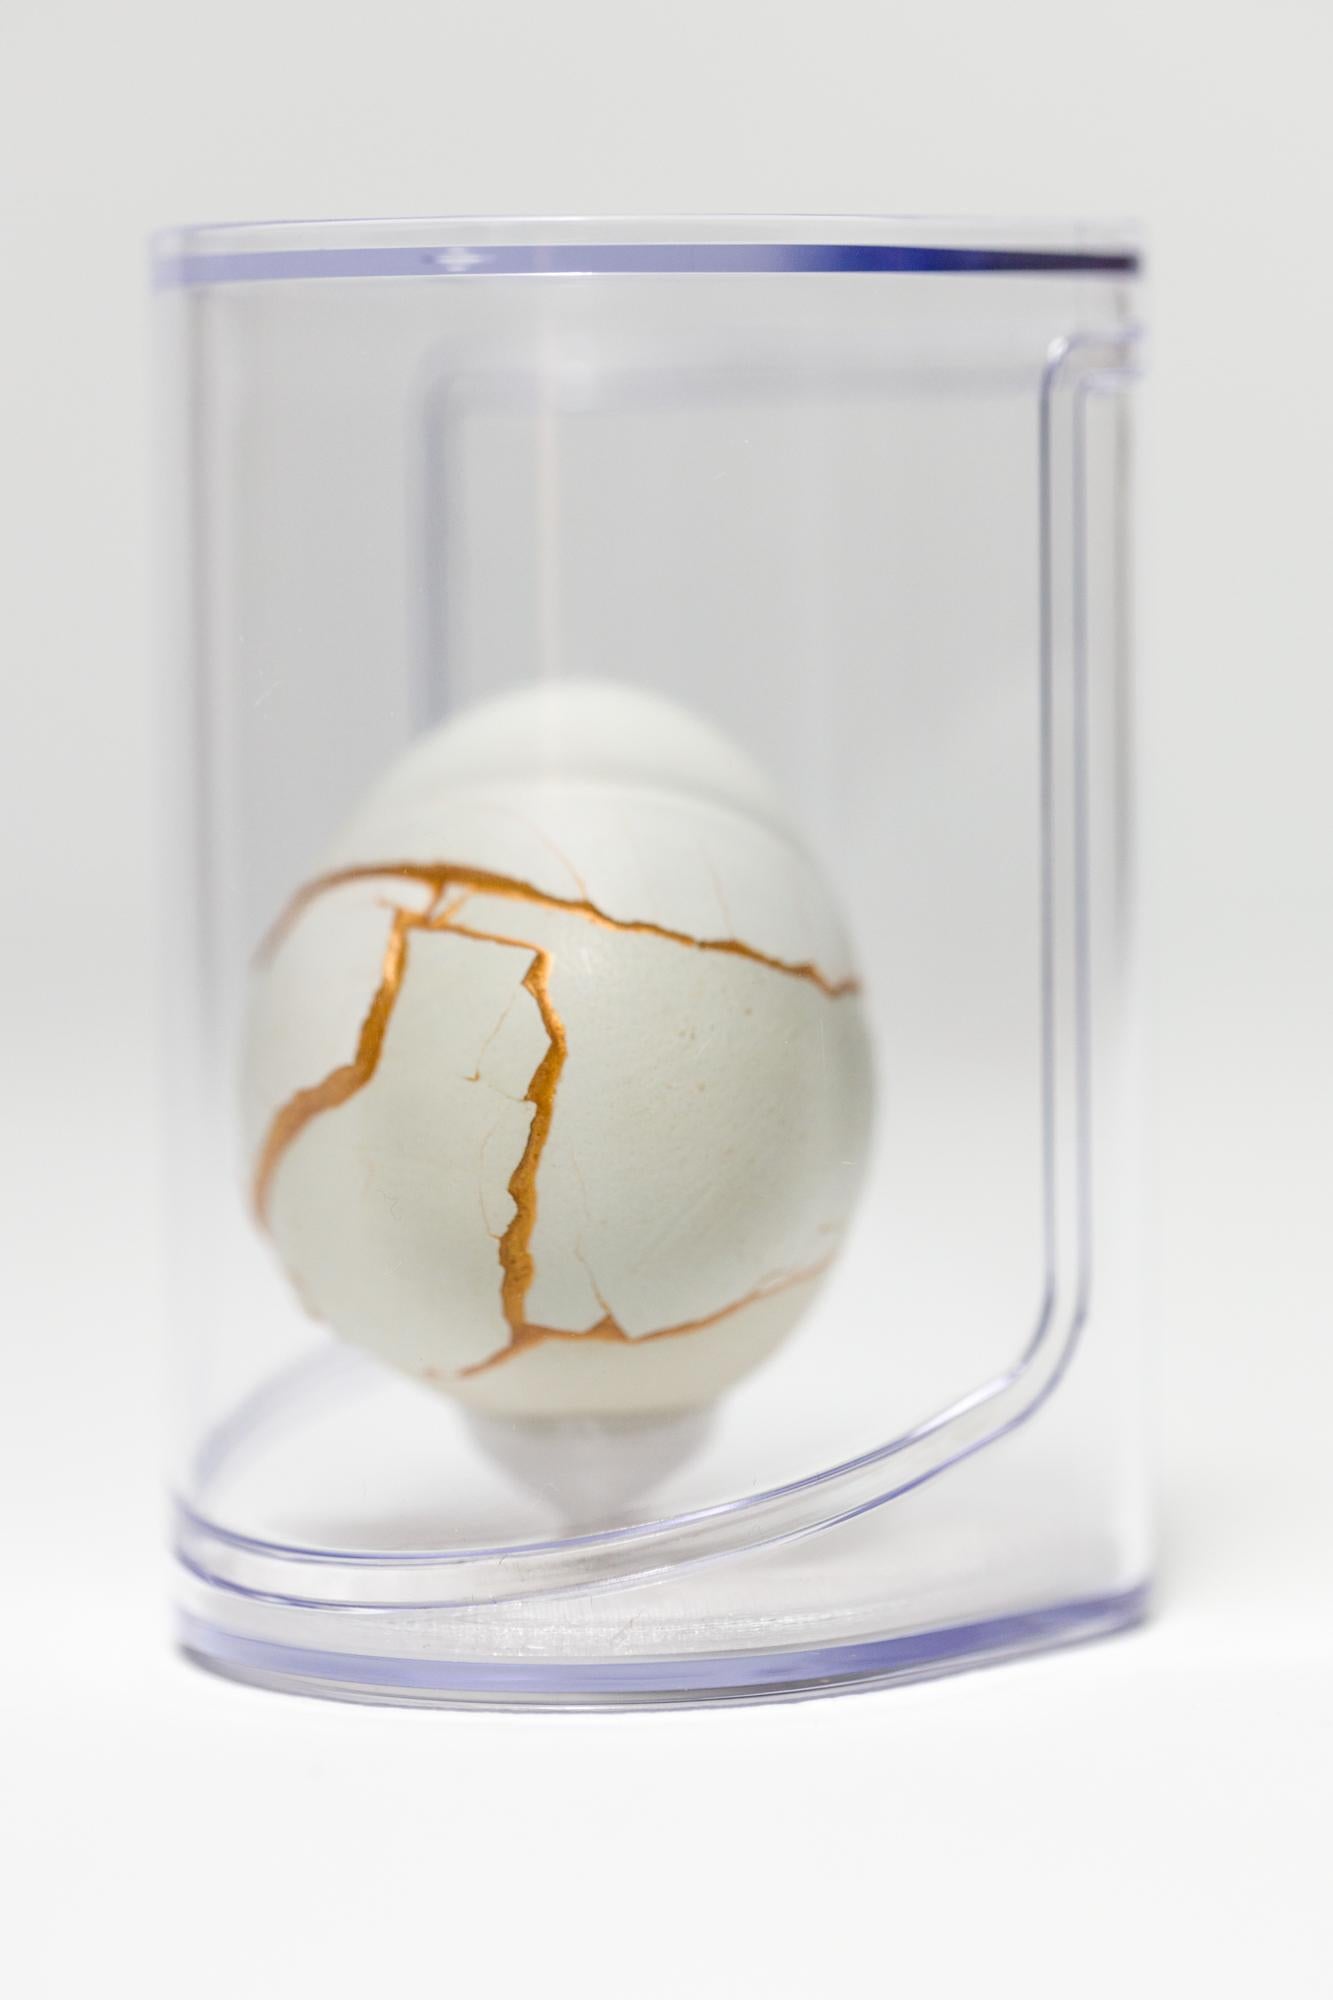 chimaera egg